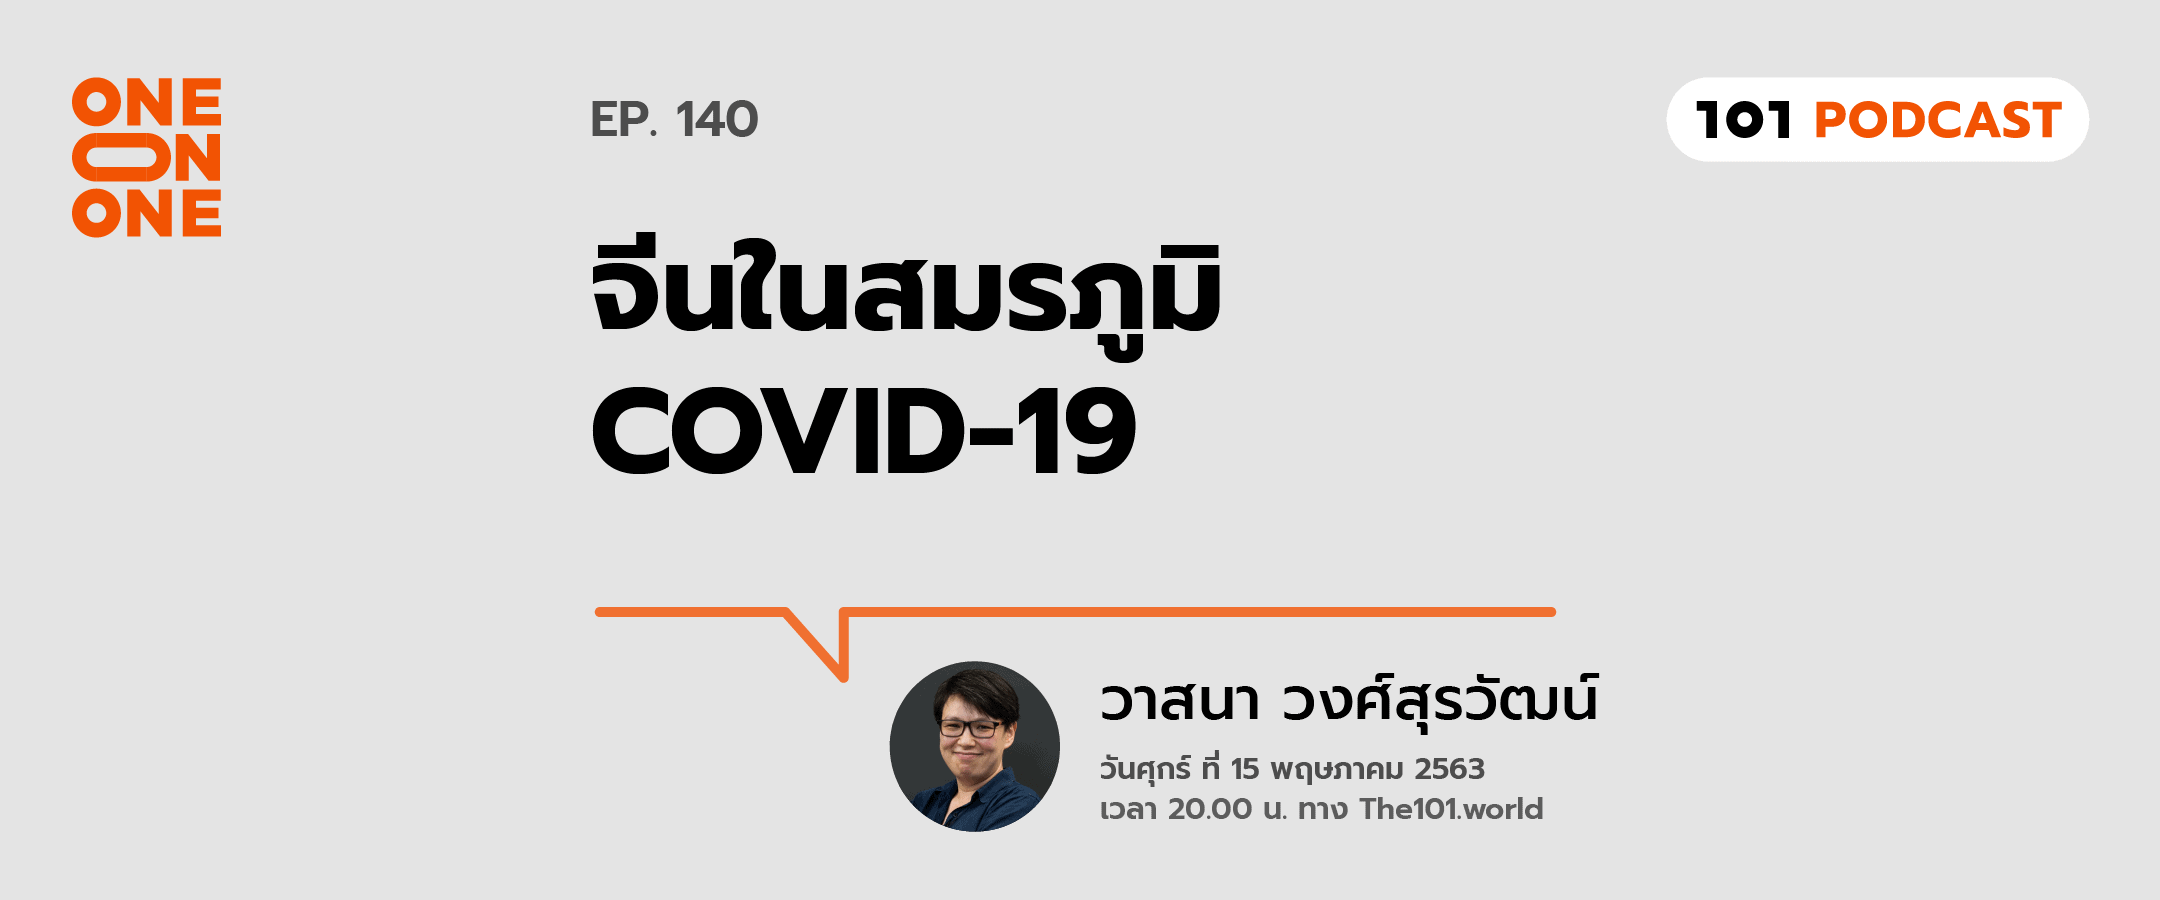 101 One-On-One Ep.140 : จีนในสมรภูมิ : COVID-19